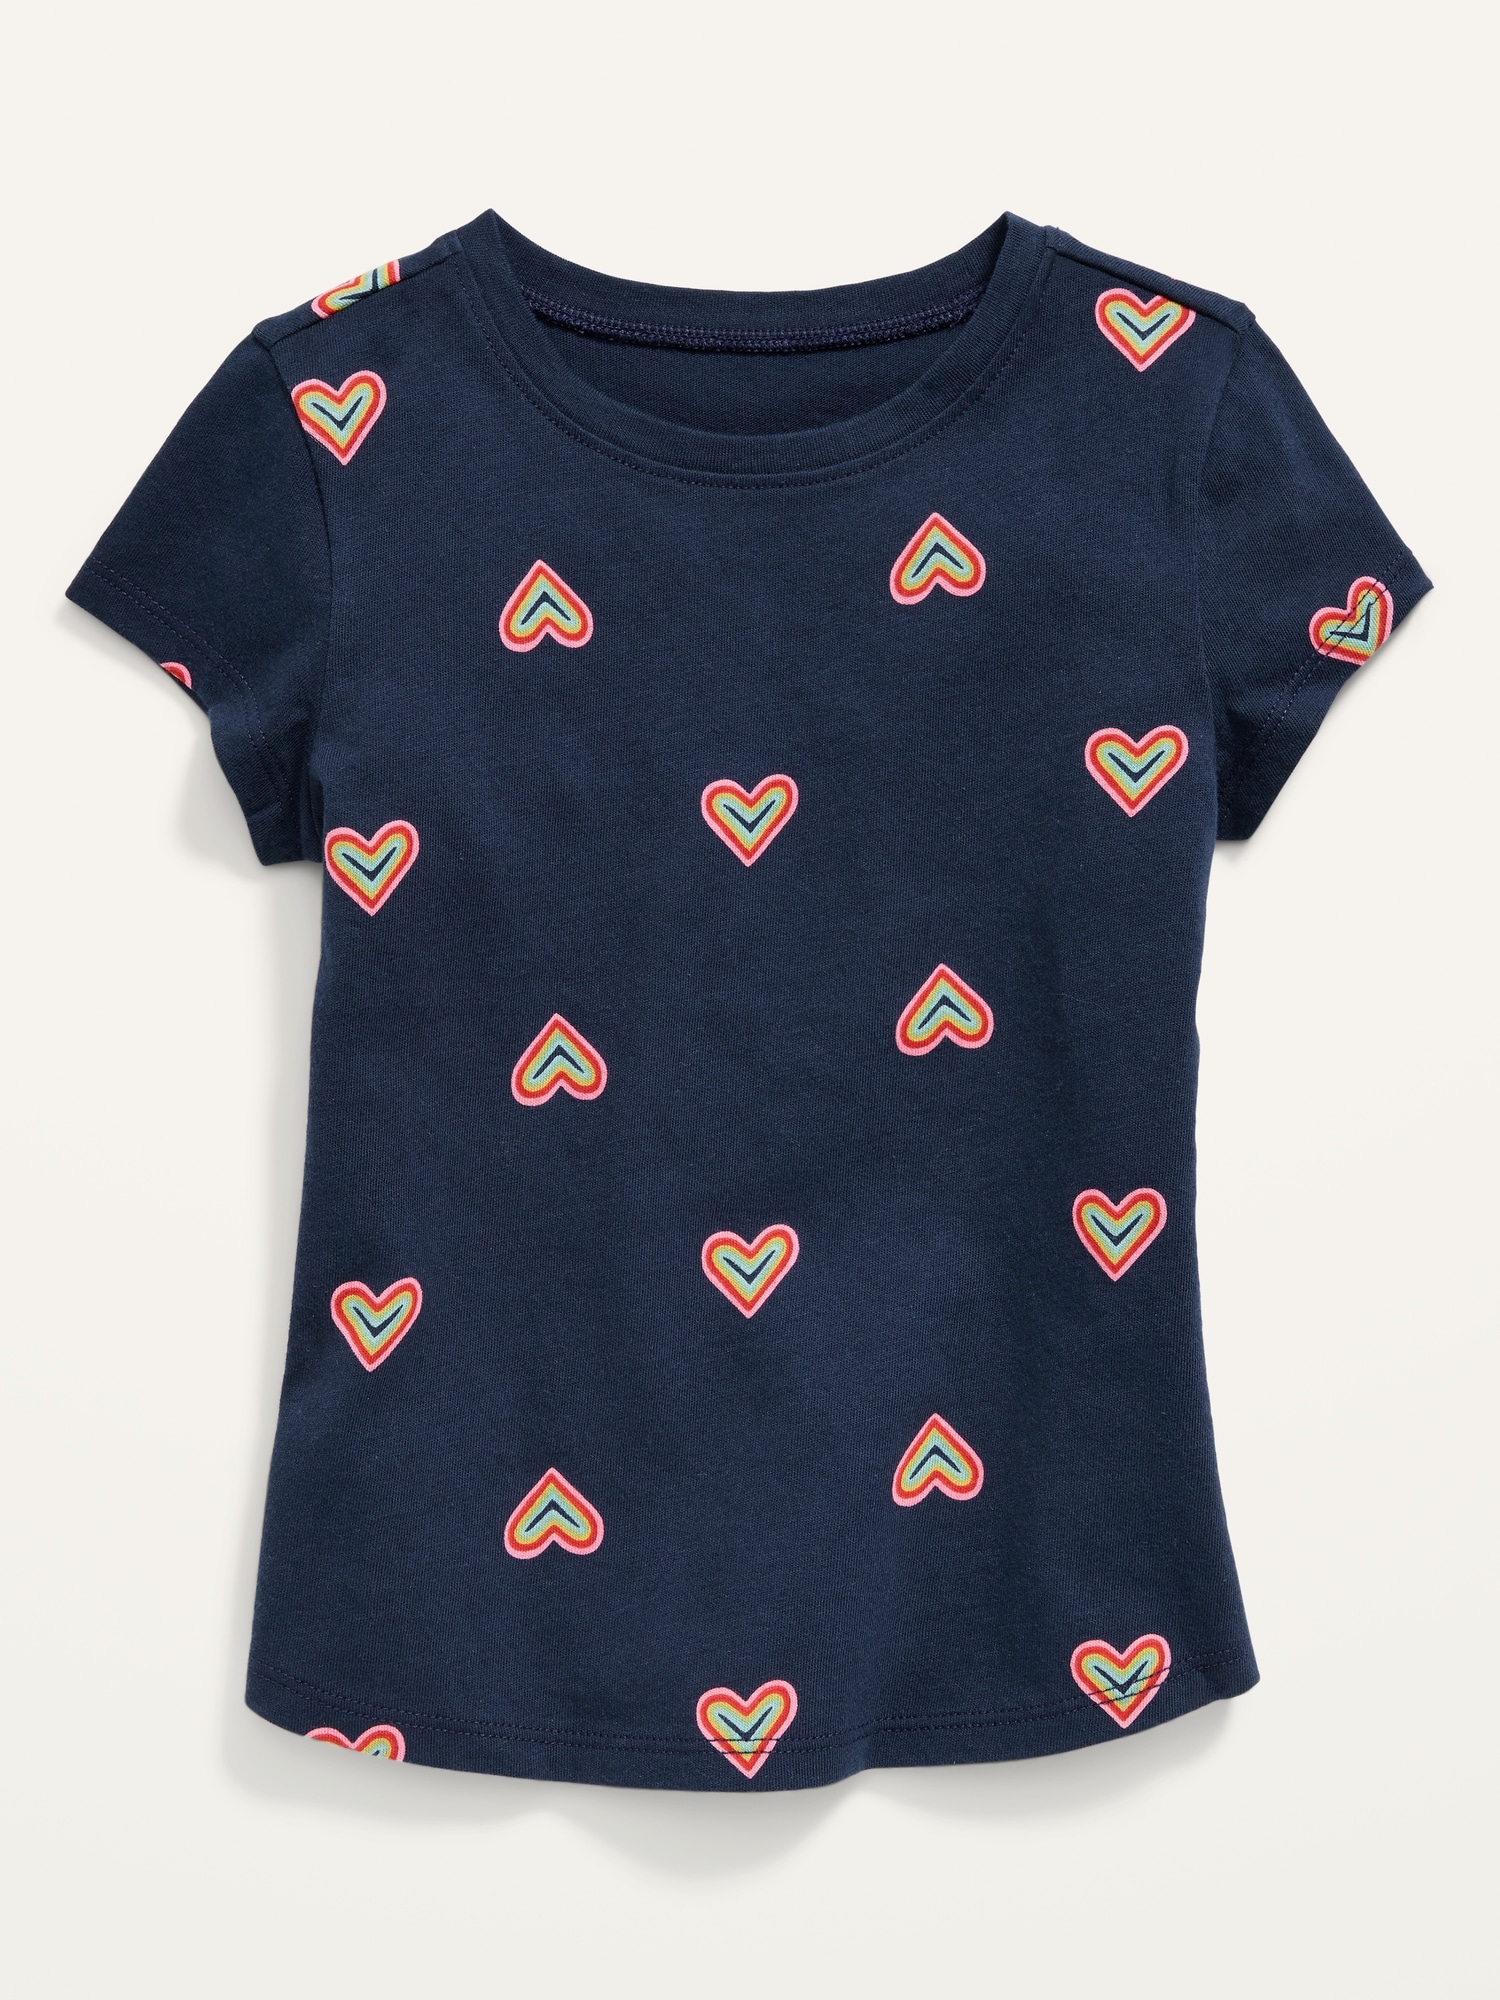 Unisex Short-Sleeve Printed T-Shirt for Toddler | Old Navy